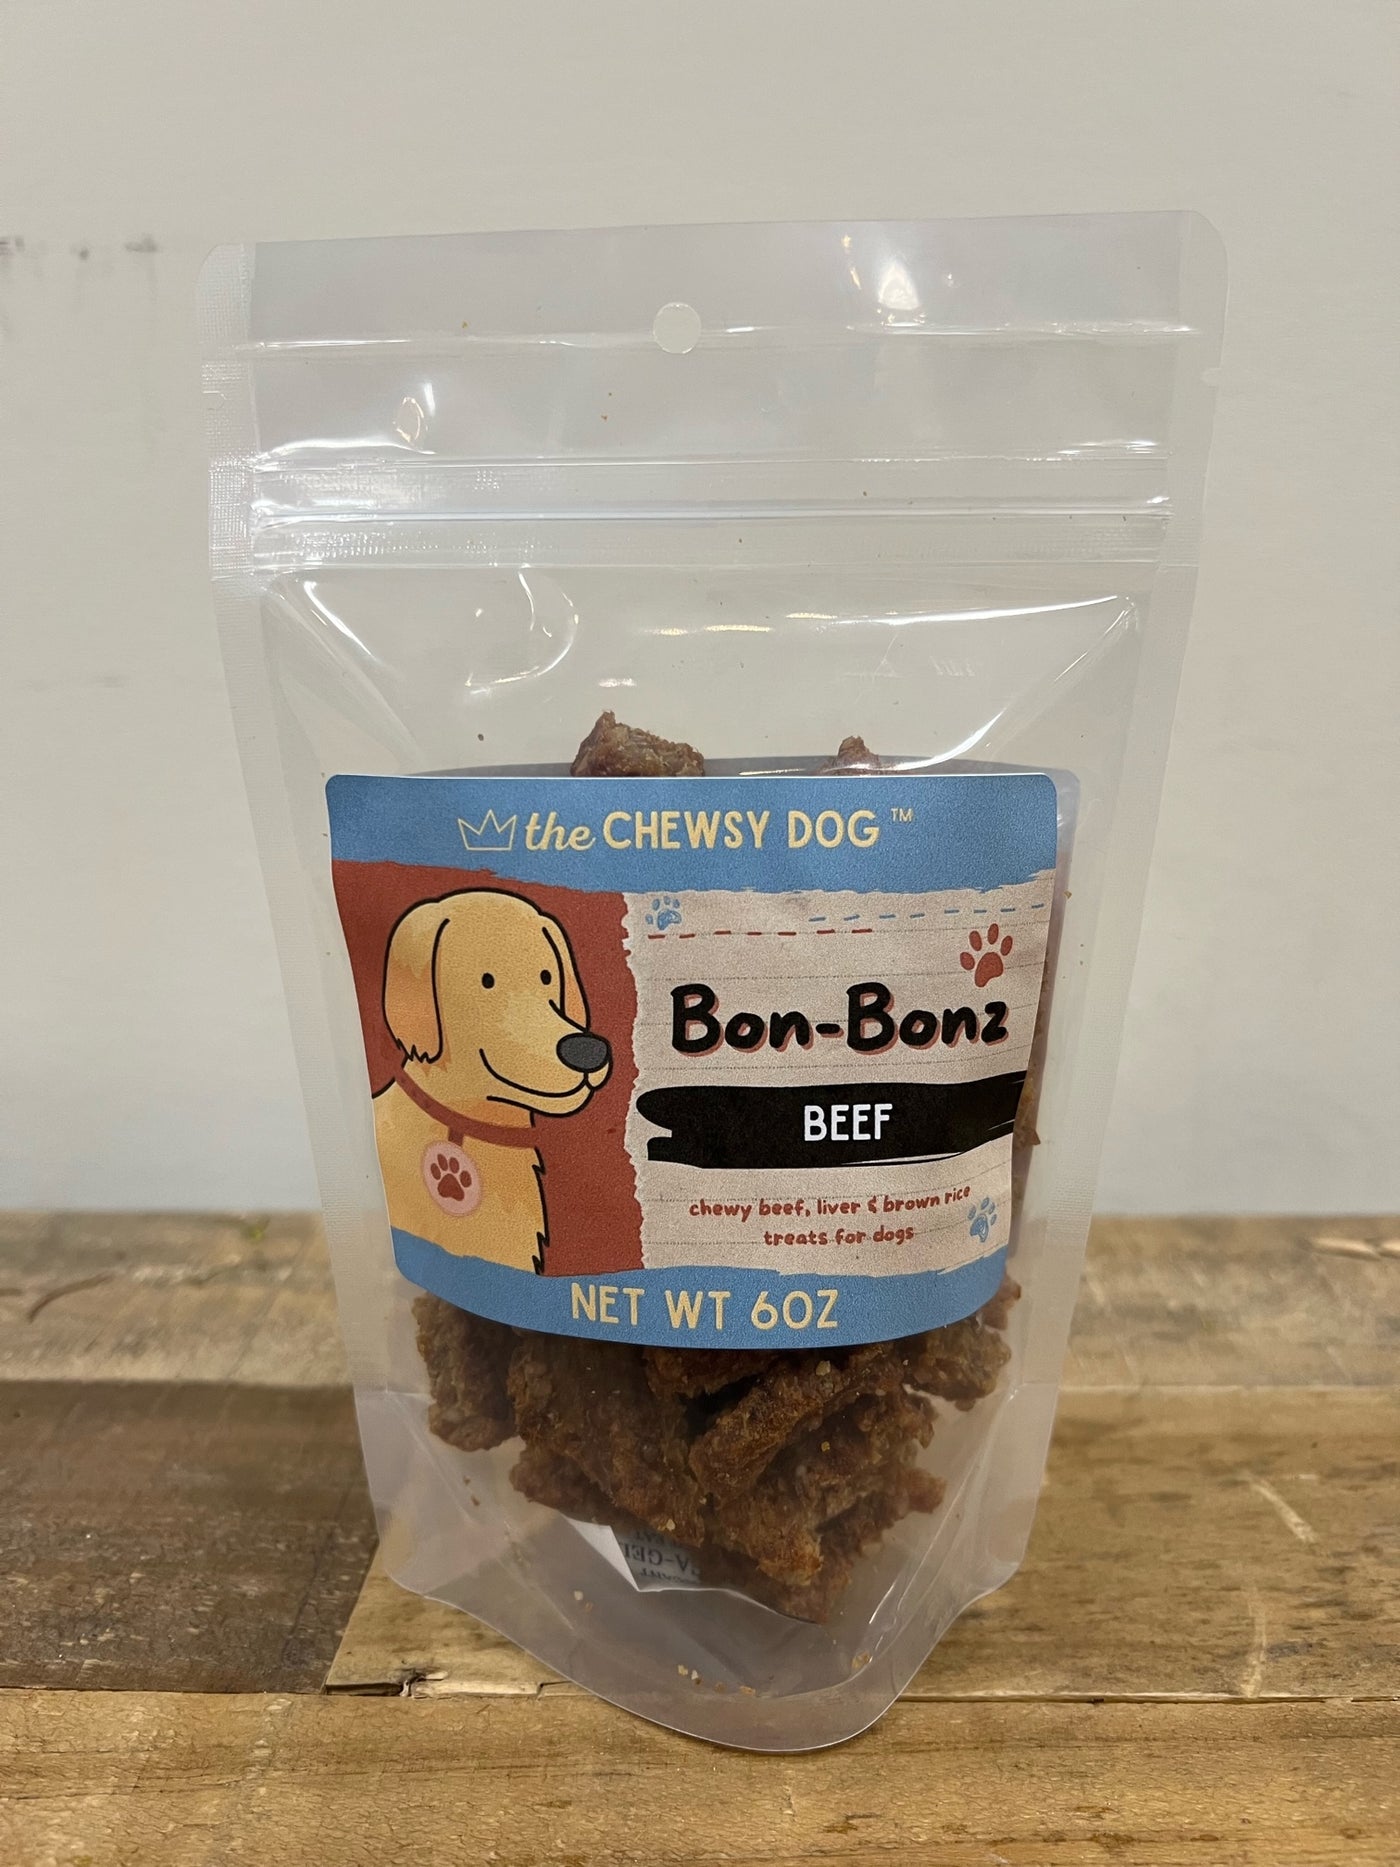 The Chewsy Dog Bon-Bonz - Beef